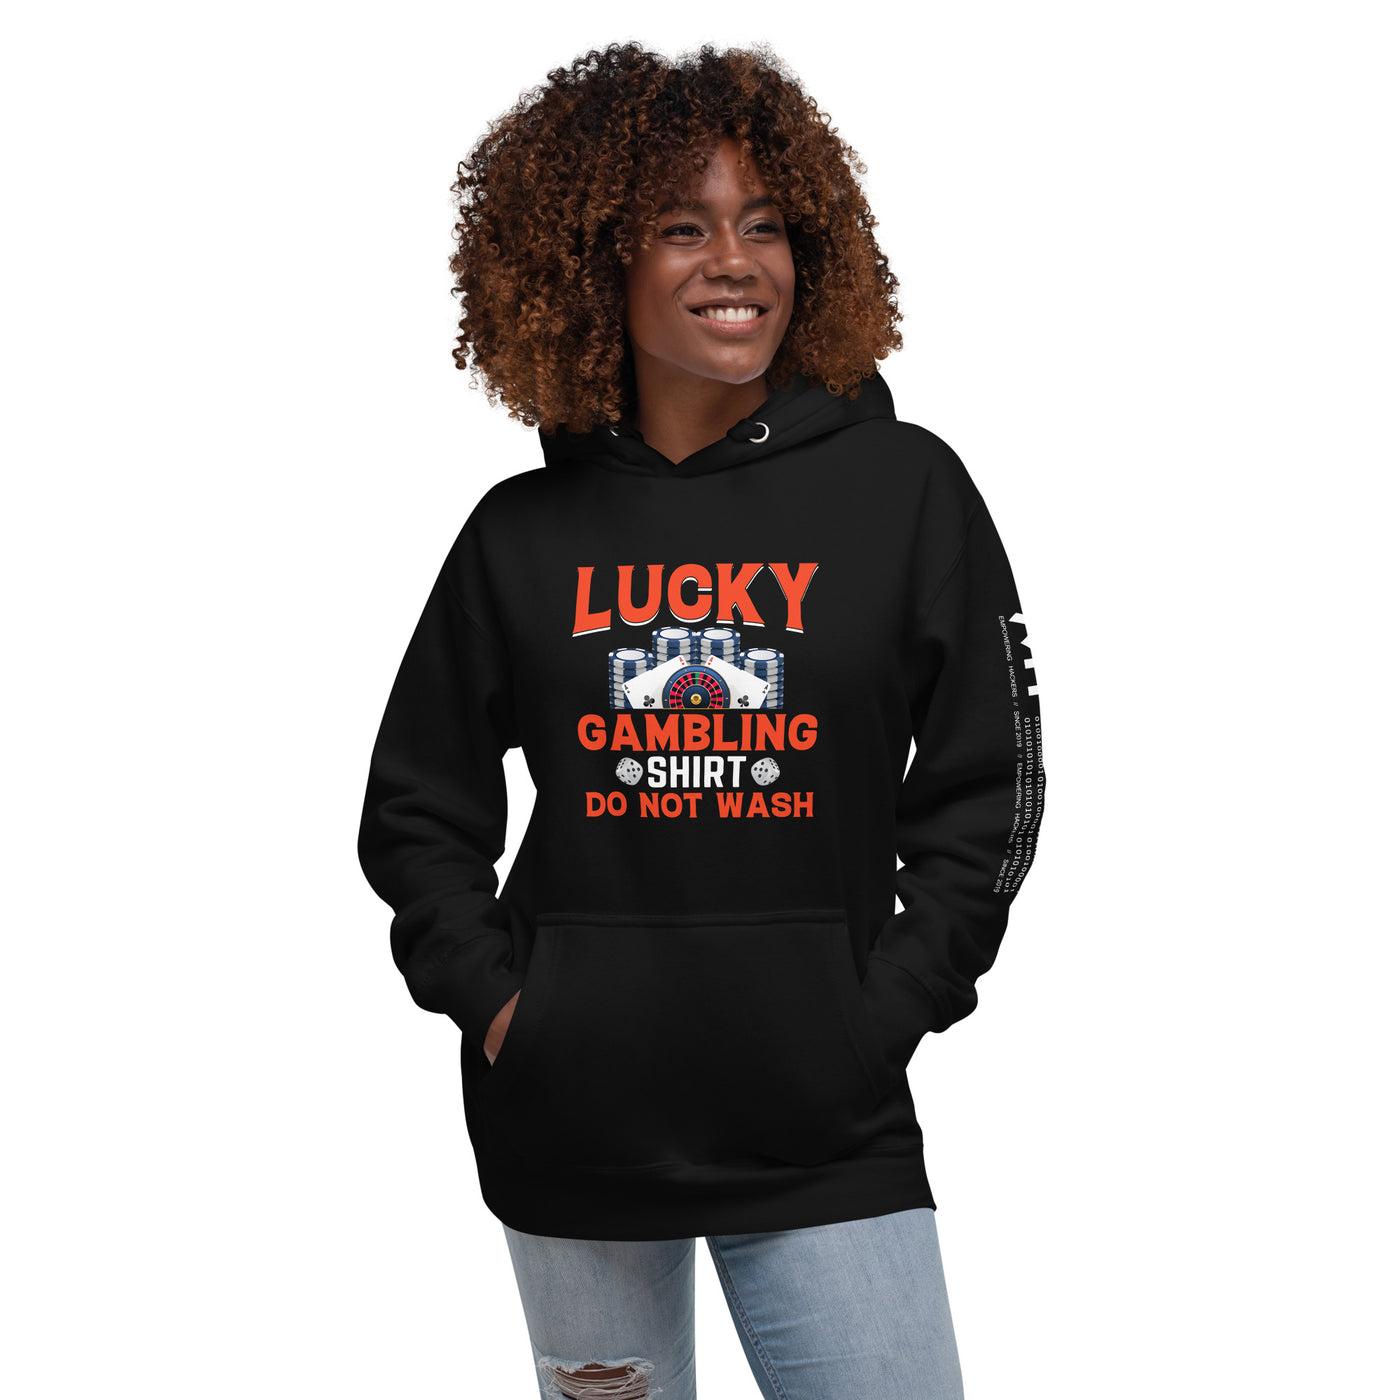 Lucky Gambling Shirt: Do Not Wash - Unisex Hoodie